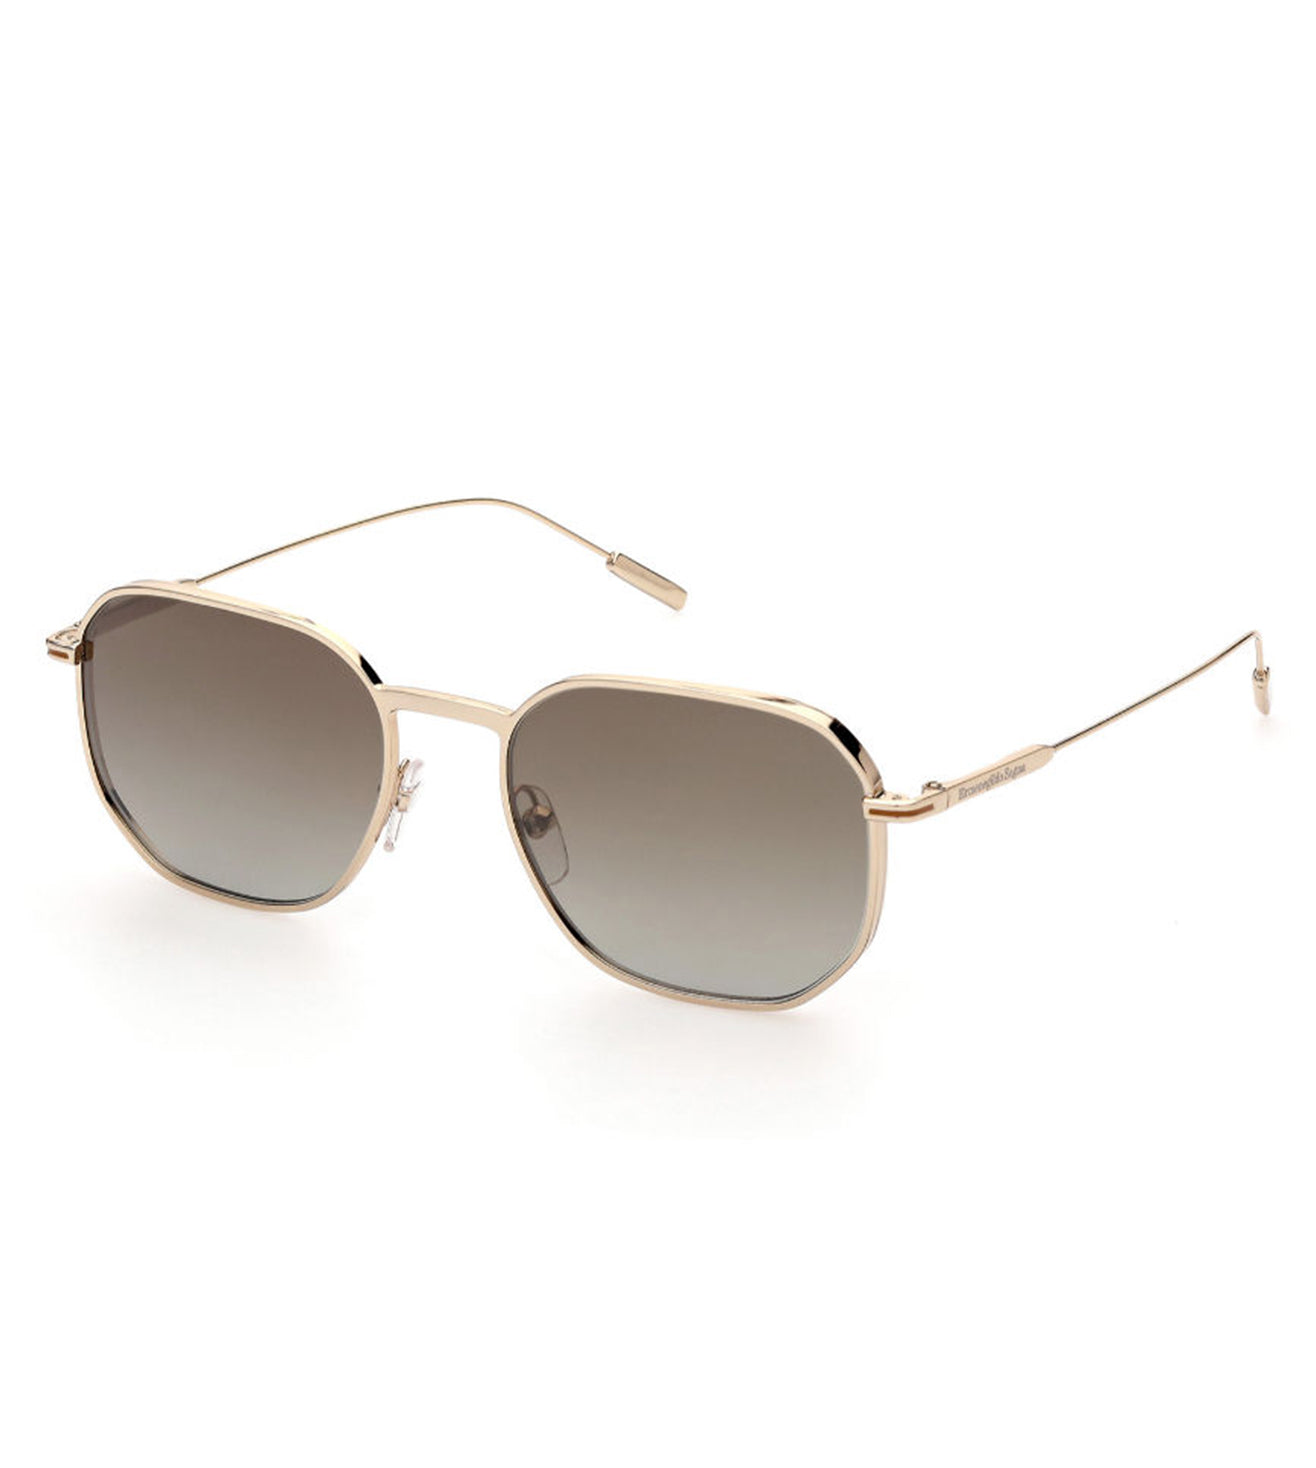 Zegna Men's Brown Round Sunglasses